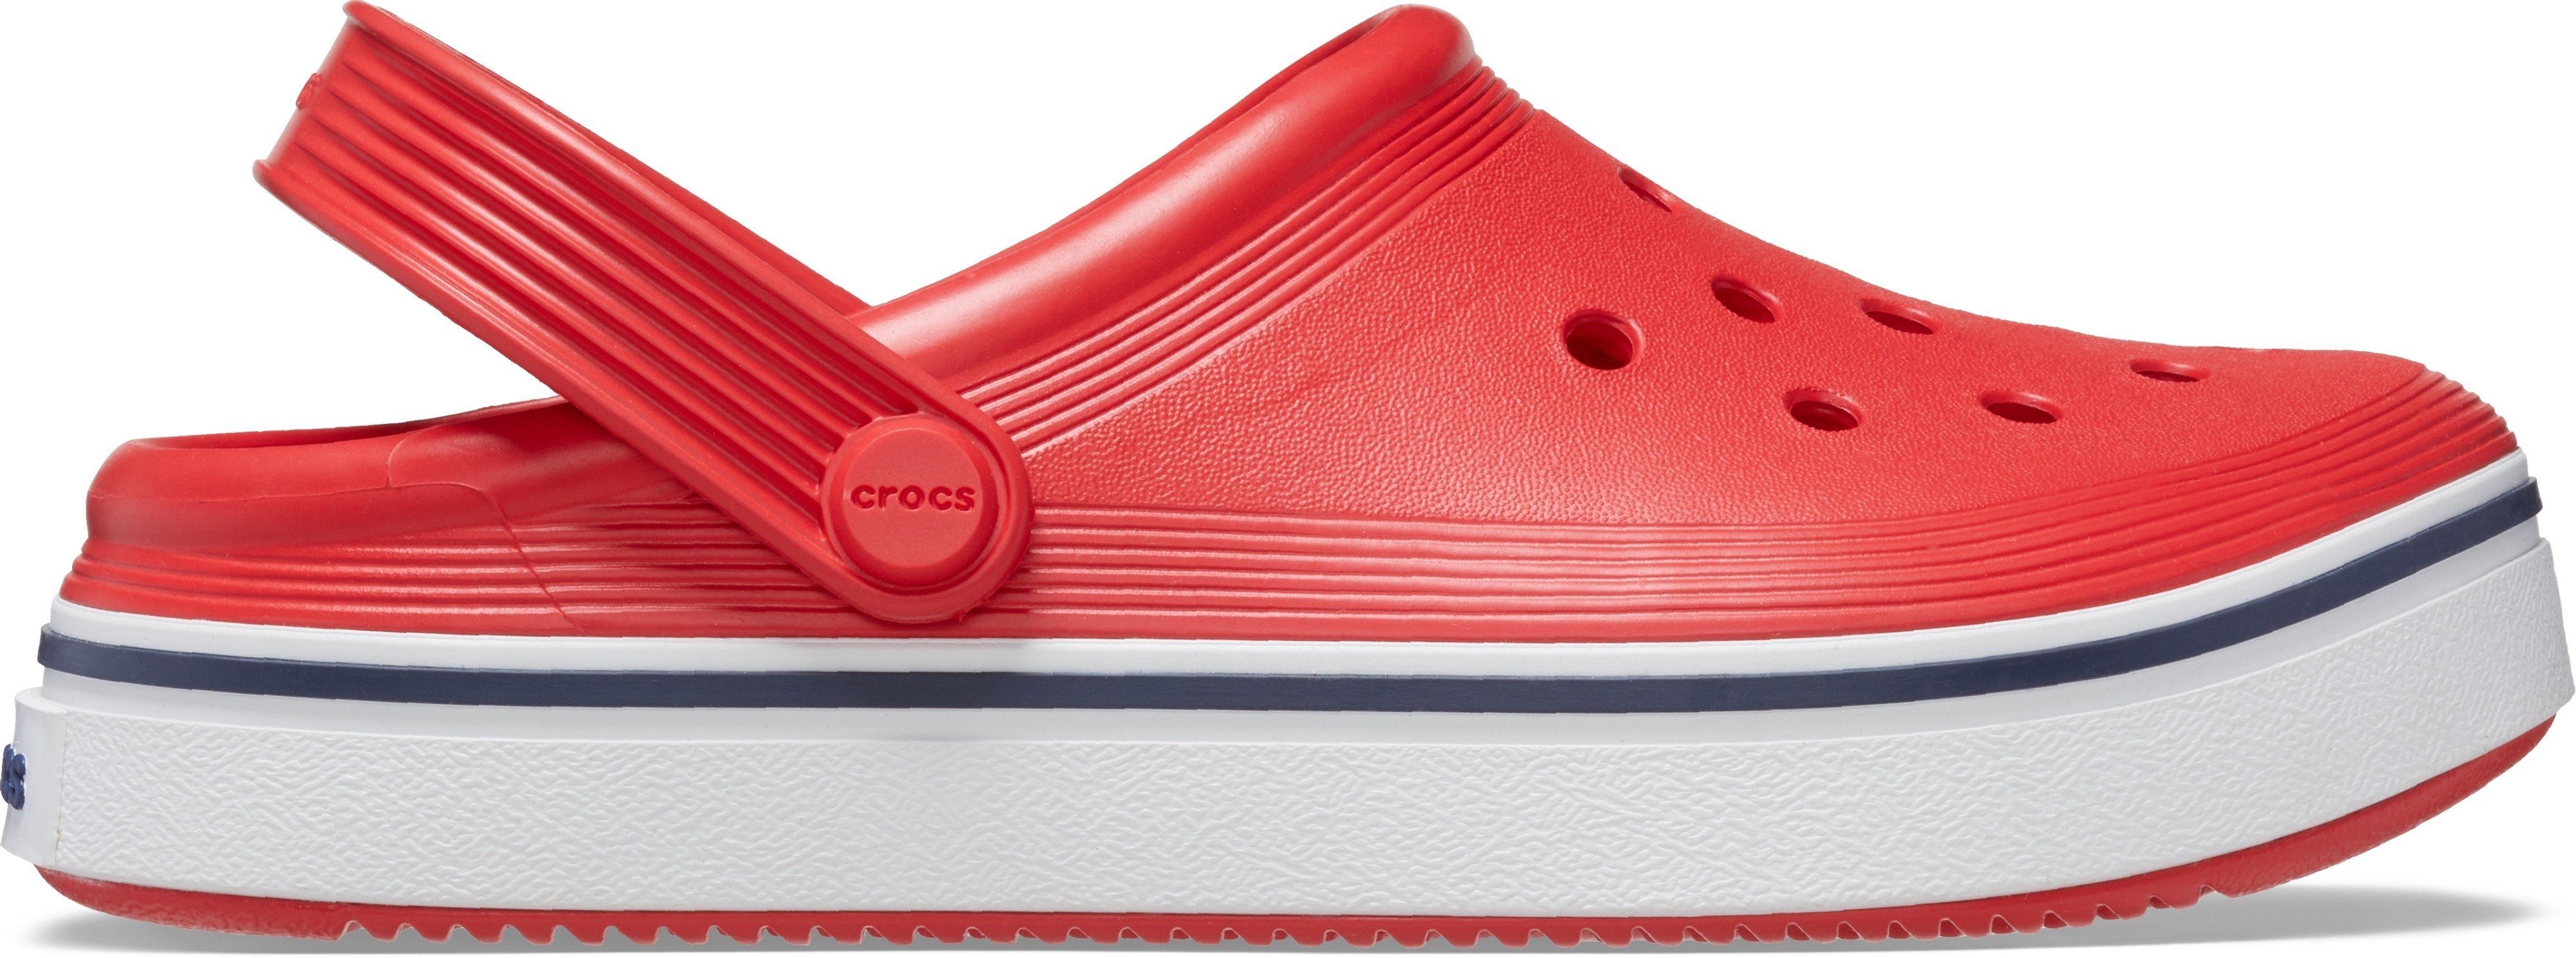 Clog Crocs Clog coolem Farbeinsatz K Crocband Clean mit